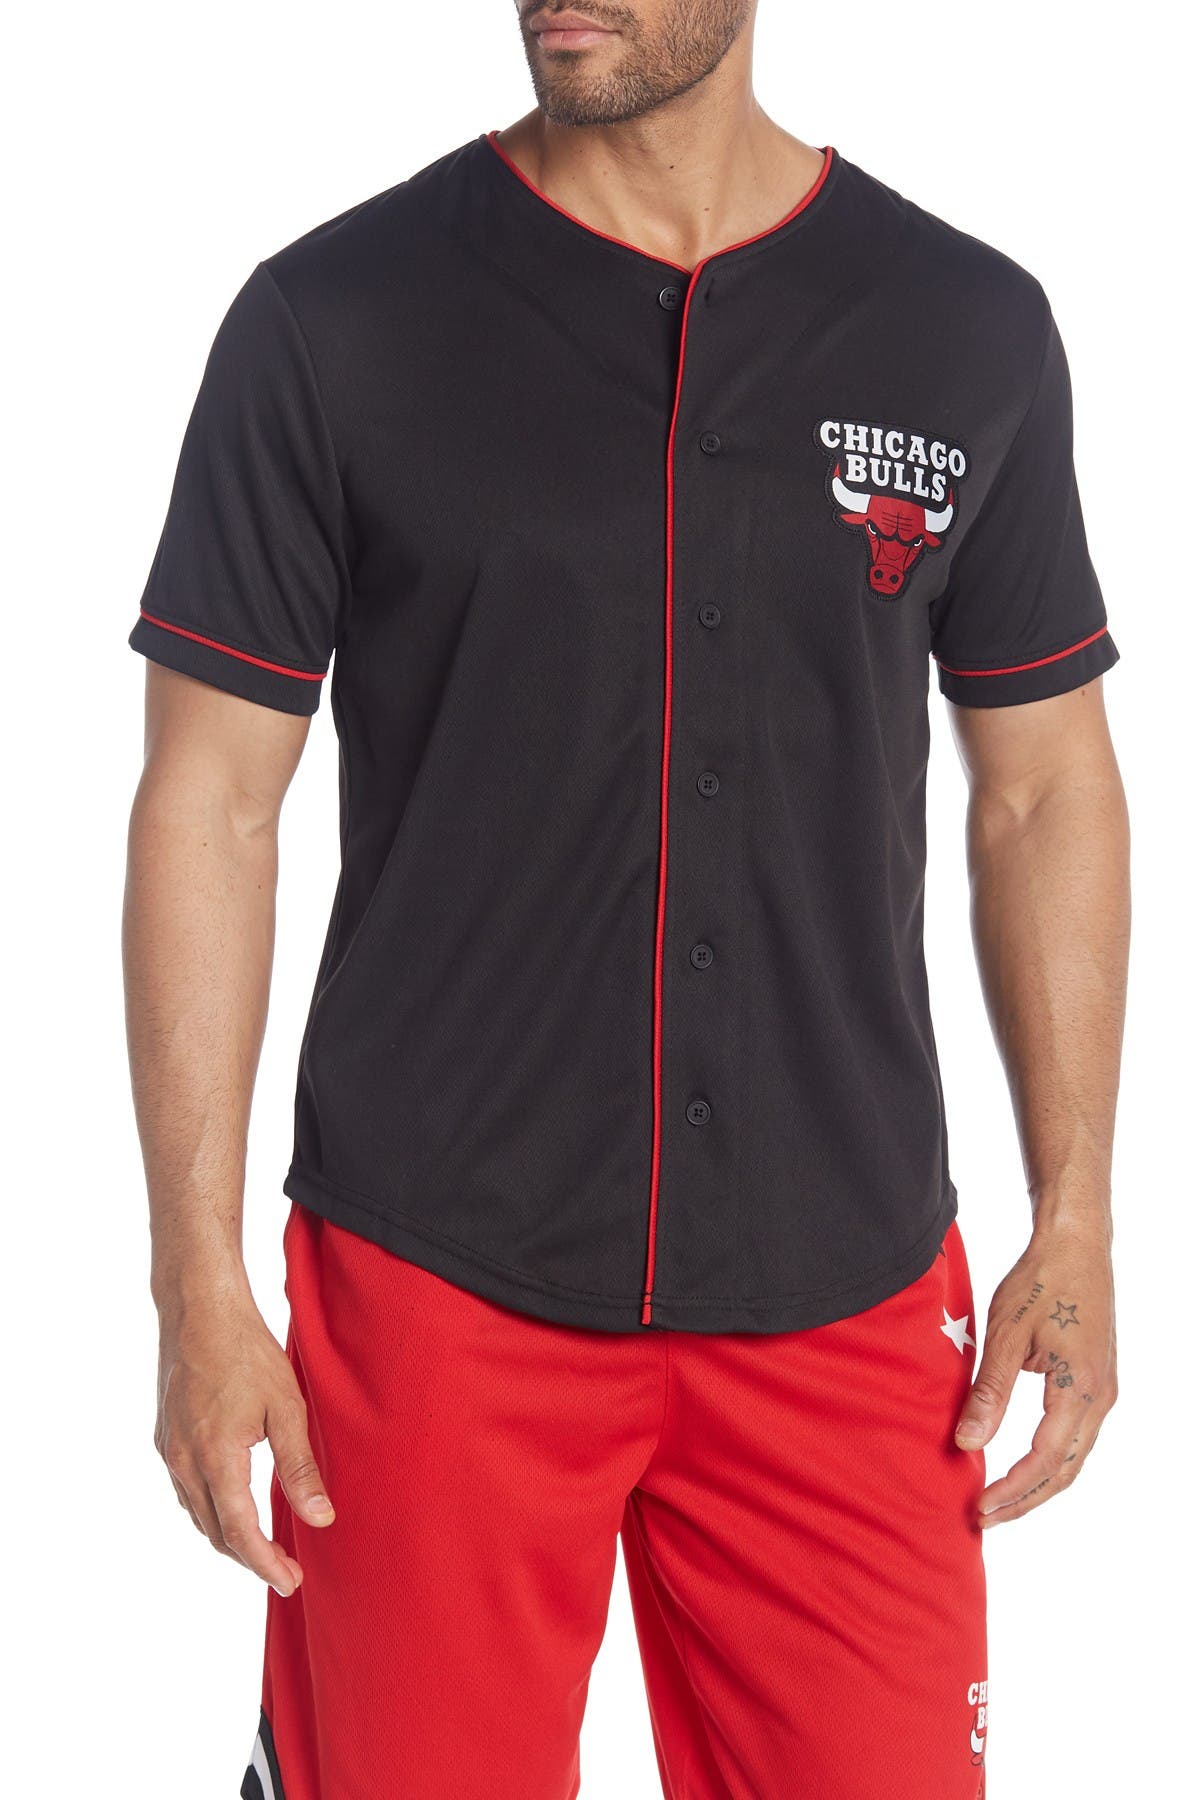 red chicago bulls baseball jersey